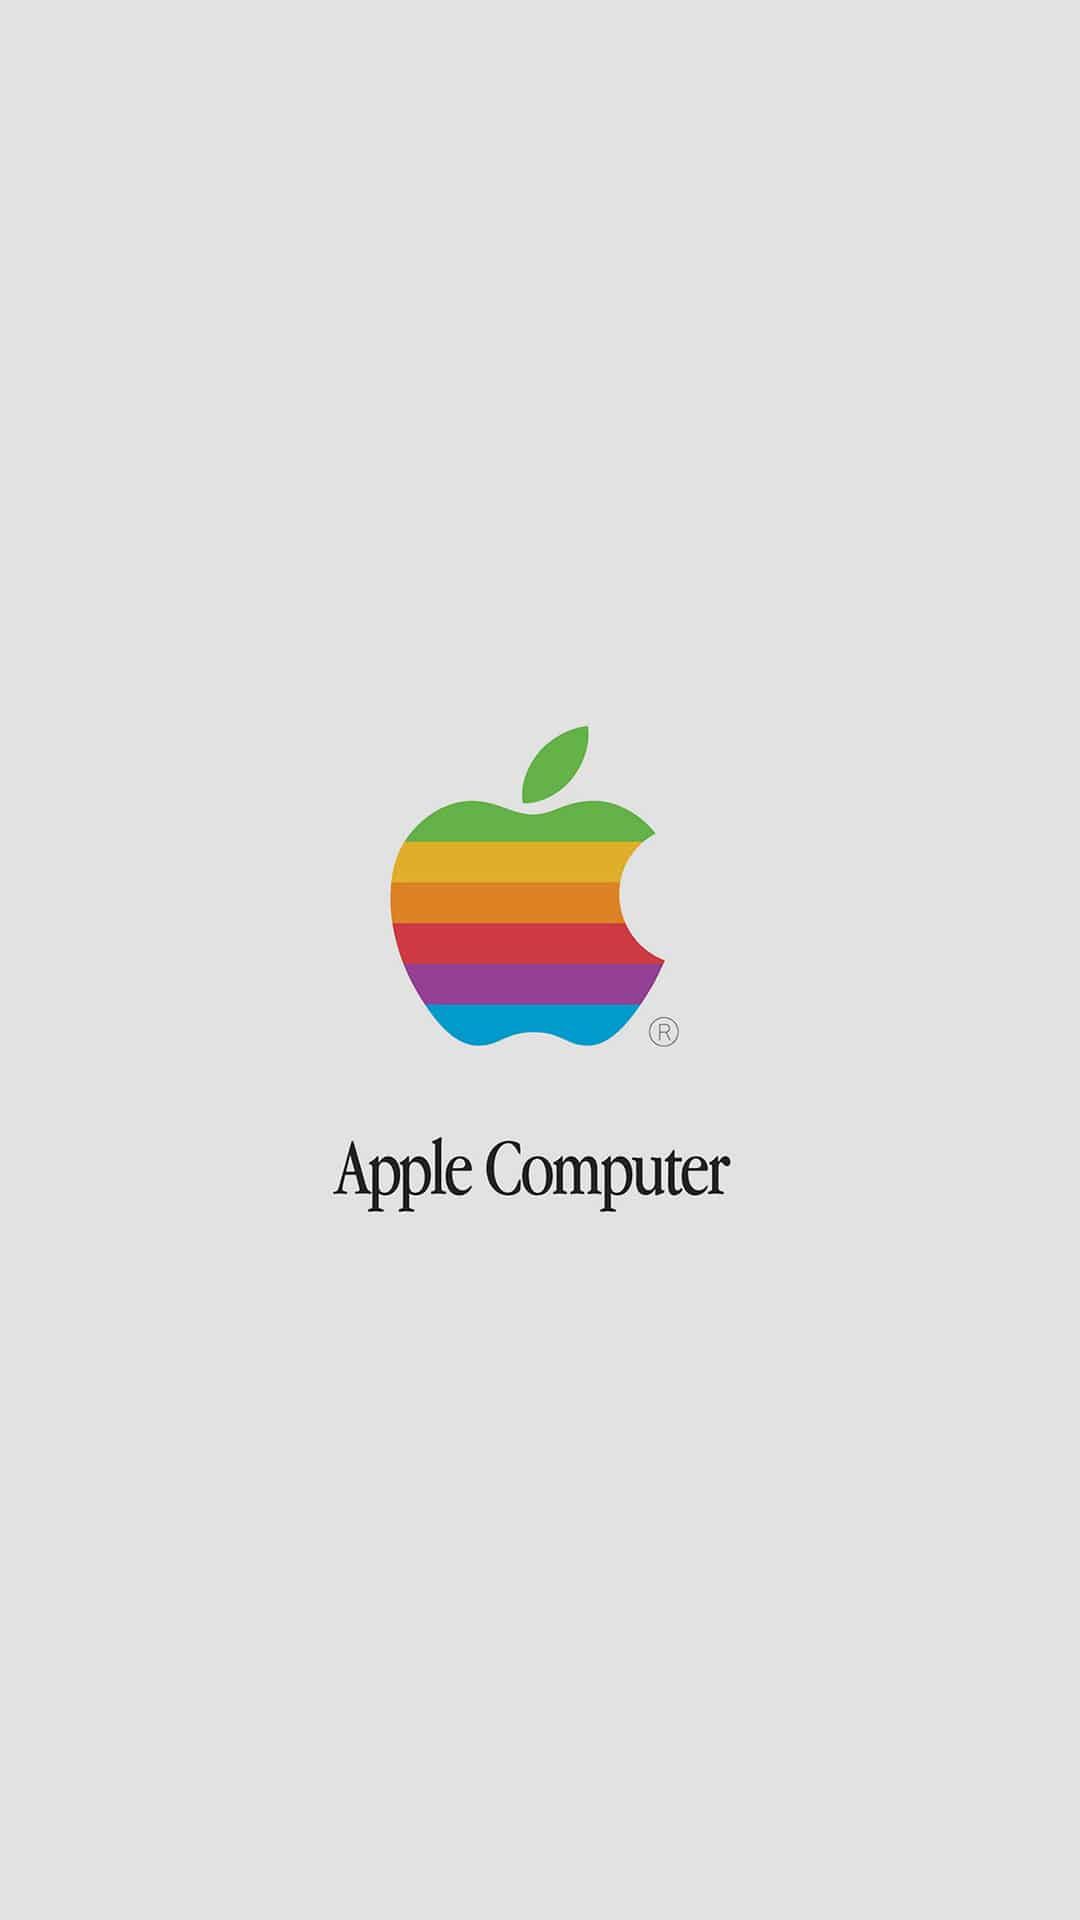 50 Minimalist iPhone Wallpapers Apple computer logo Apple logo